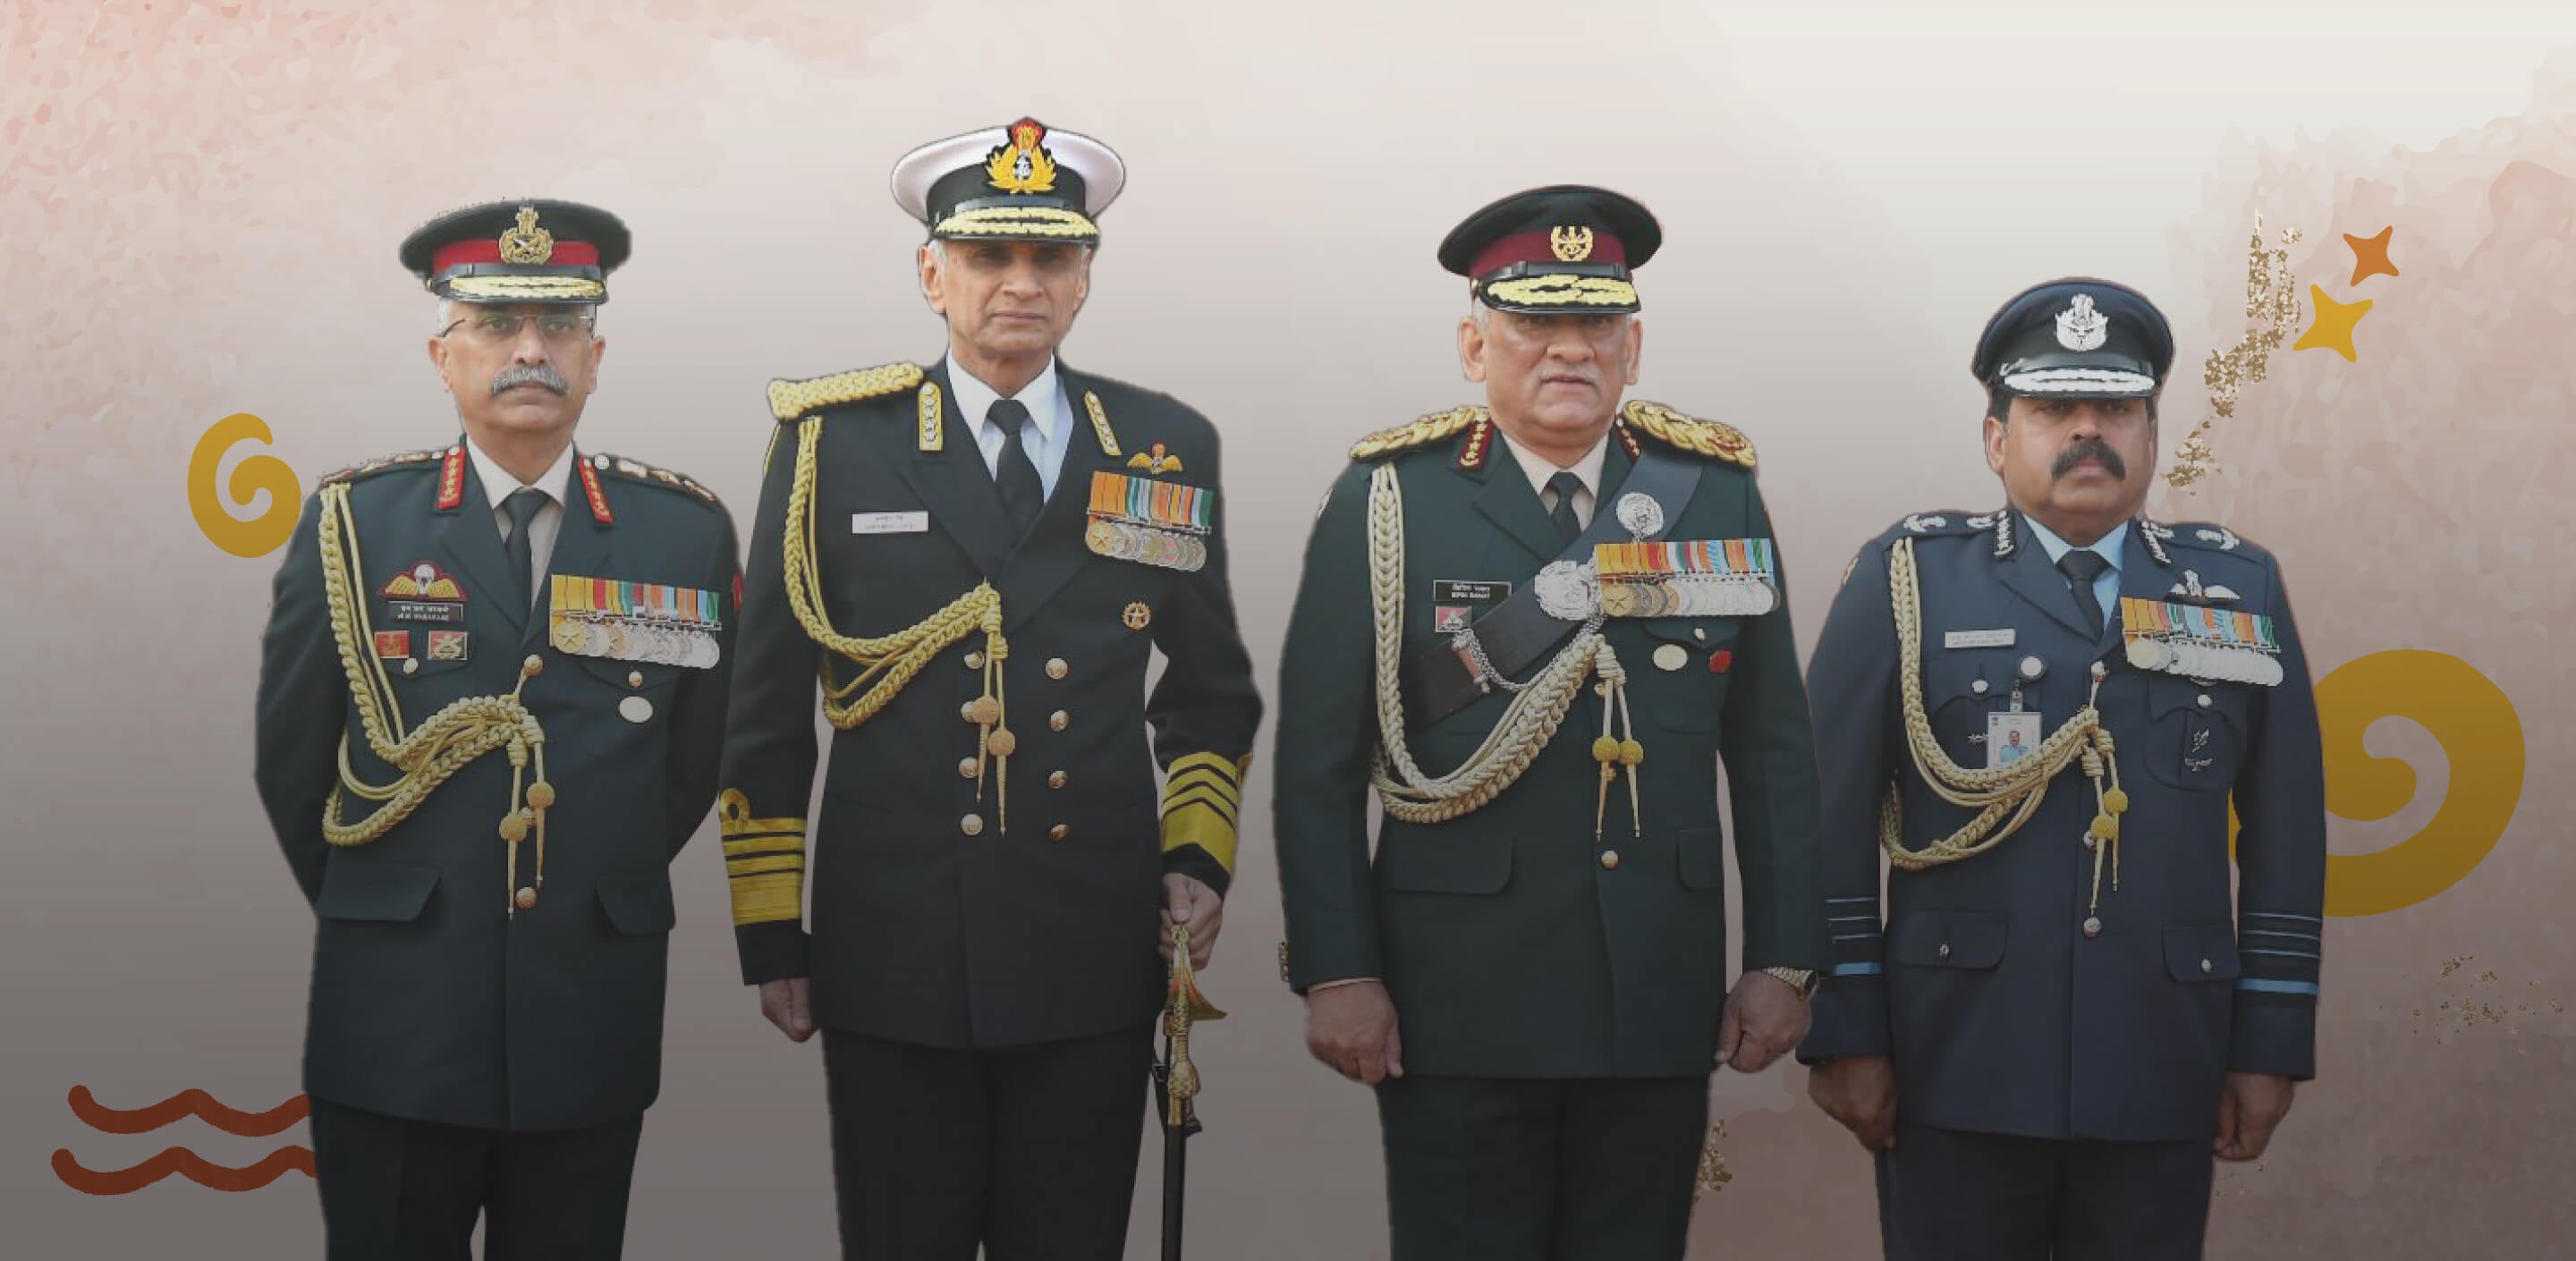 IAF ground staff get new digital camouflage uniform - The Hindu BusinessLine